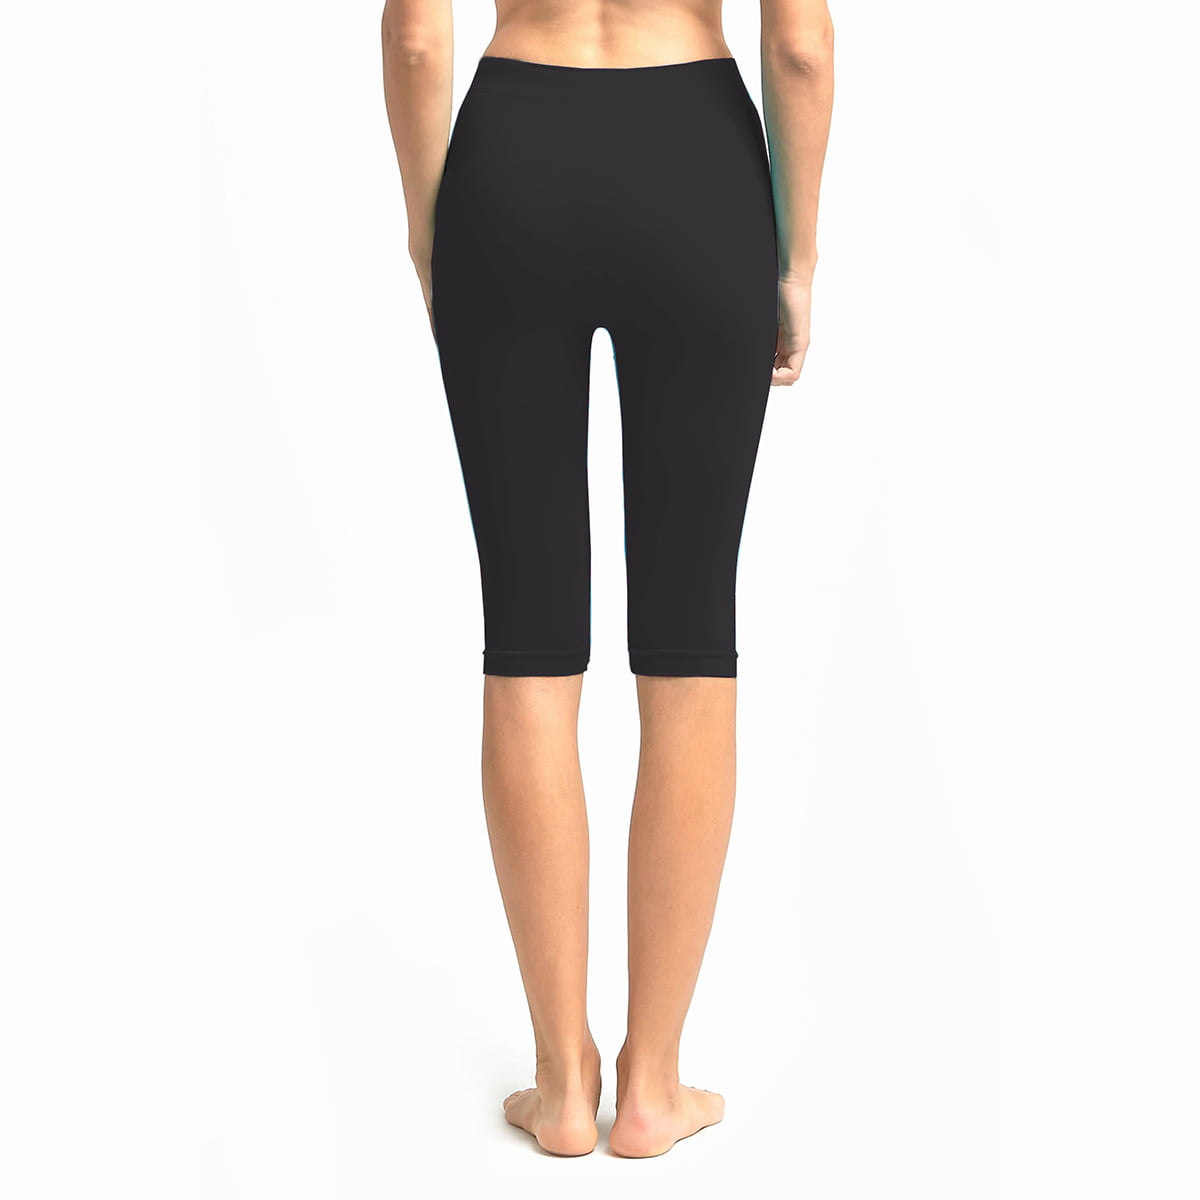 A&E Designs Ladies Yoga Pants - Cotton Spandex - Black - Size, Small